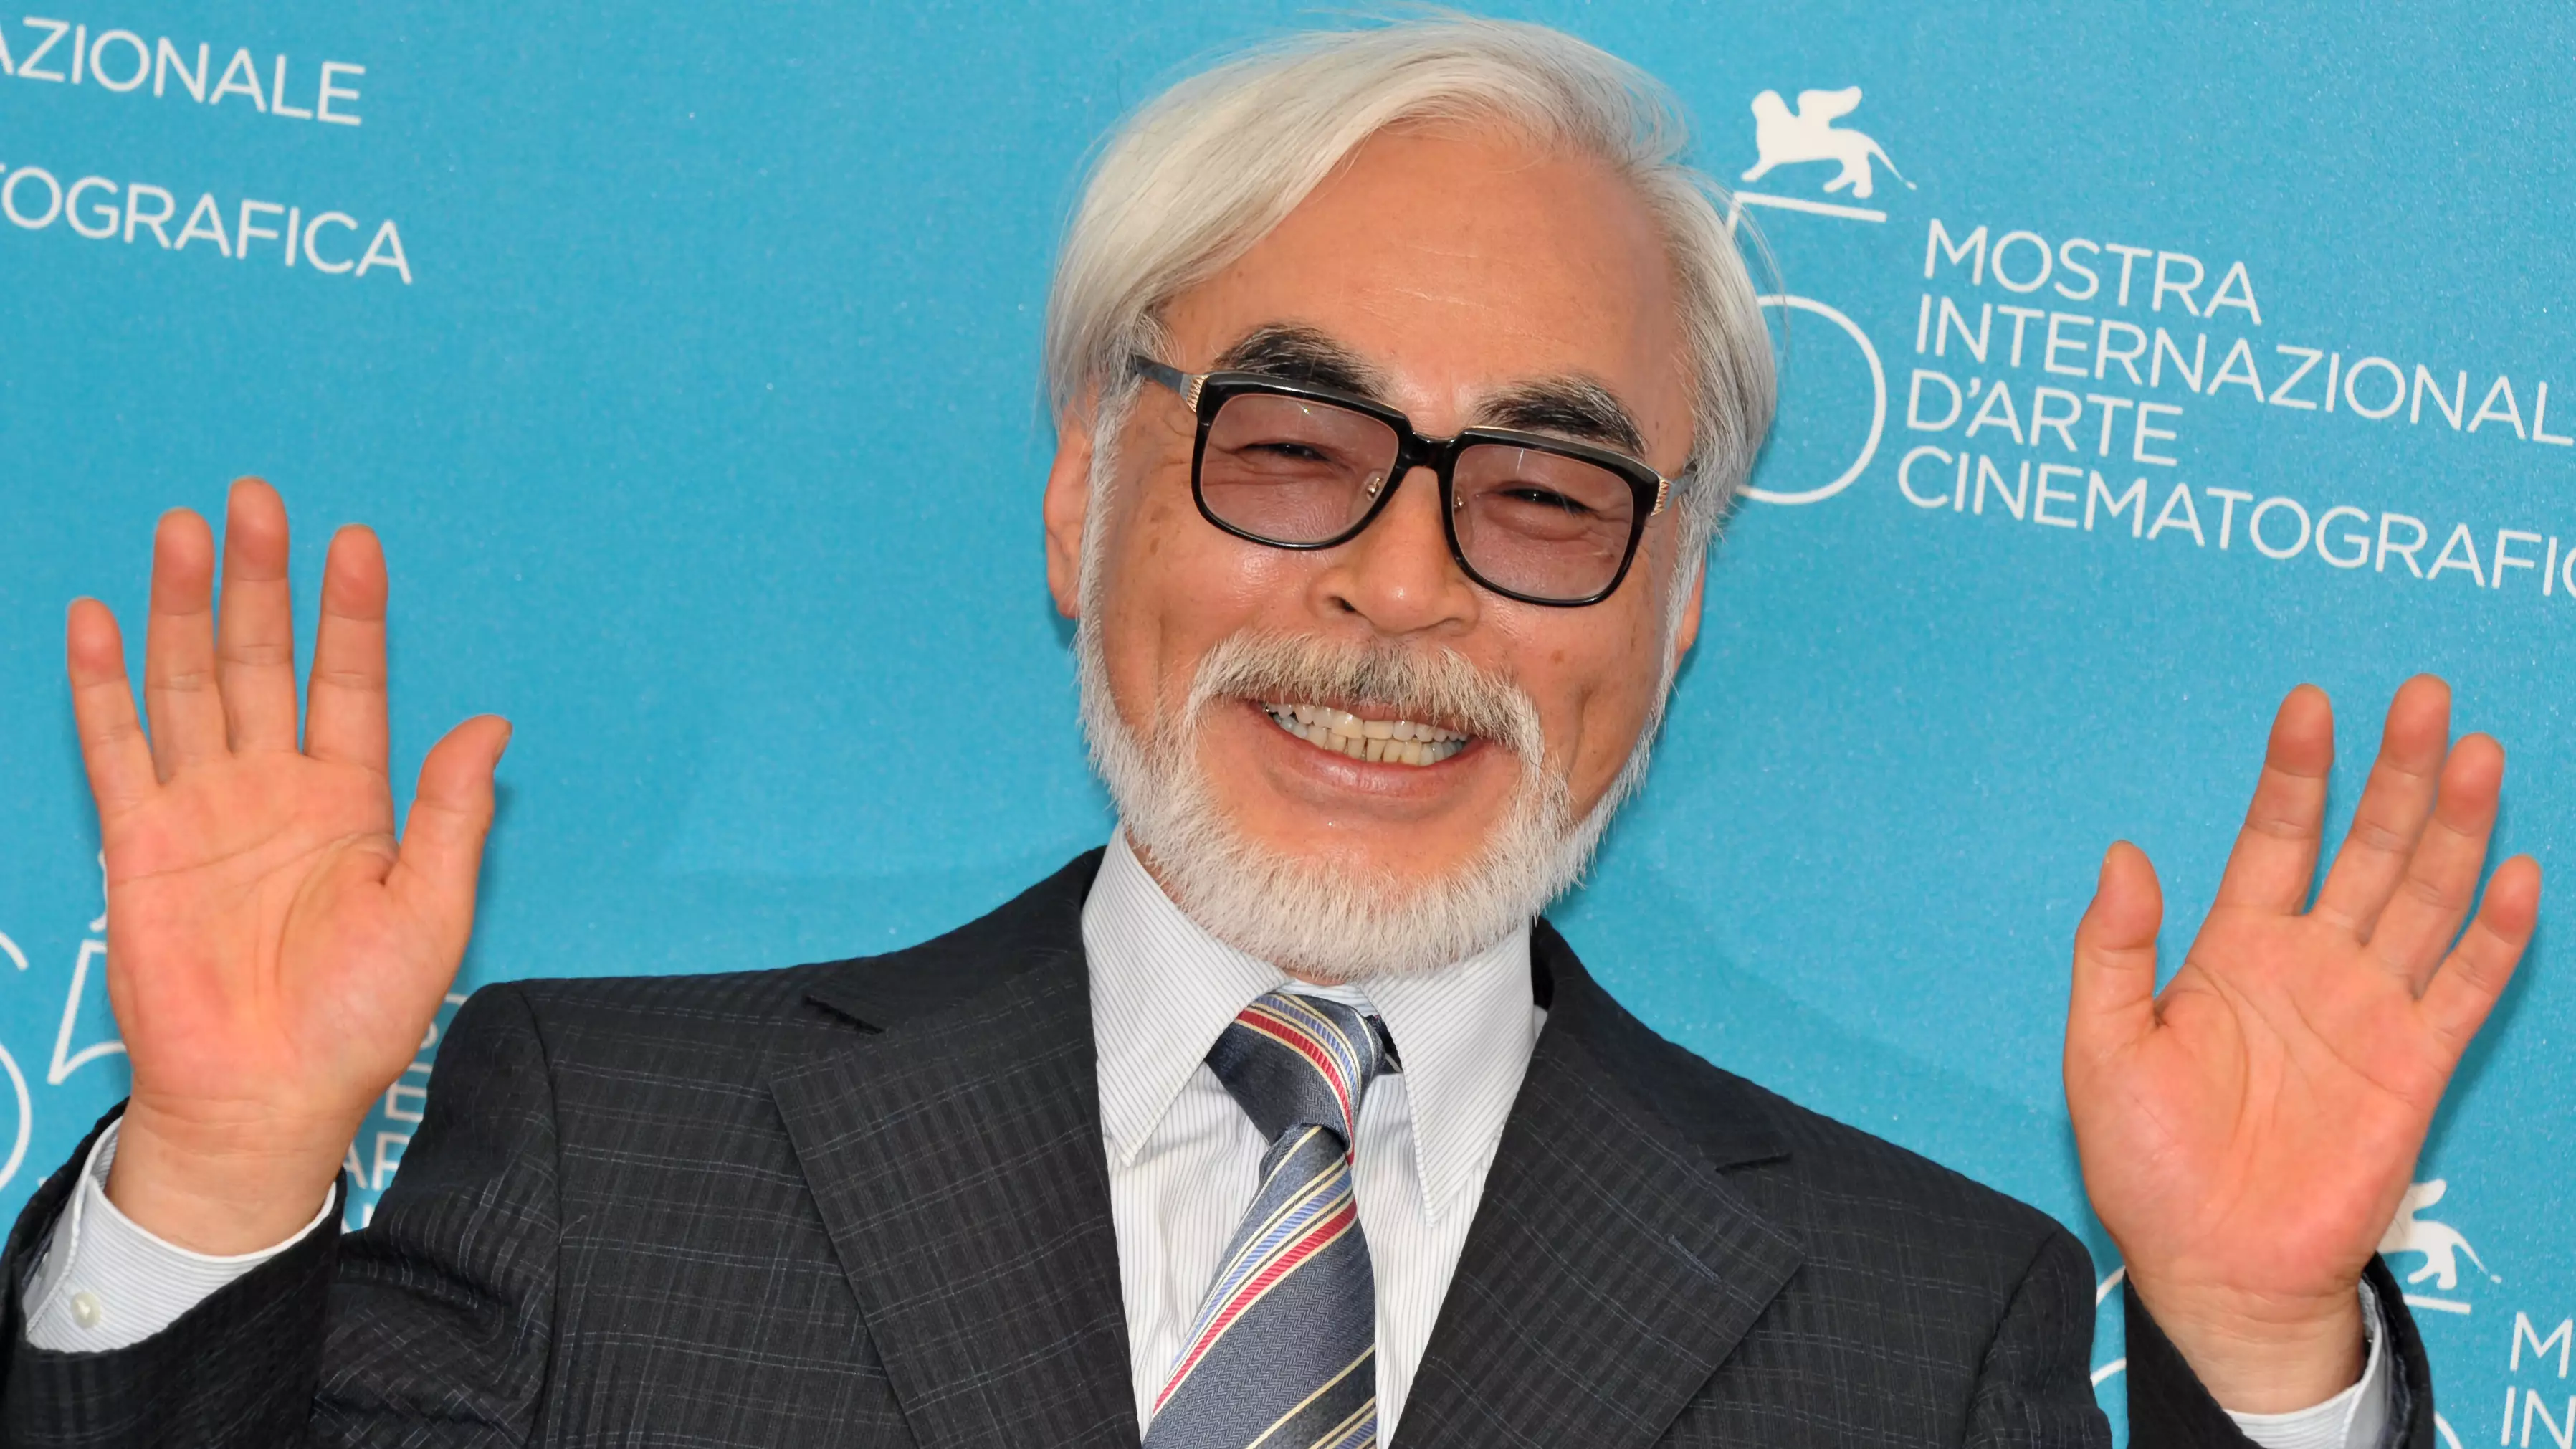 Studio Ghibli Is Spending 'More Money' On Its 'Fantastical' Next Film